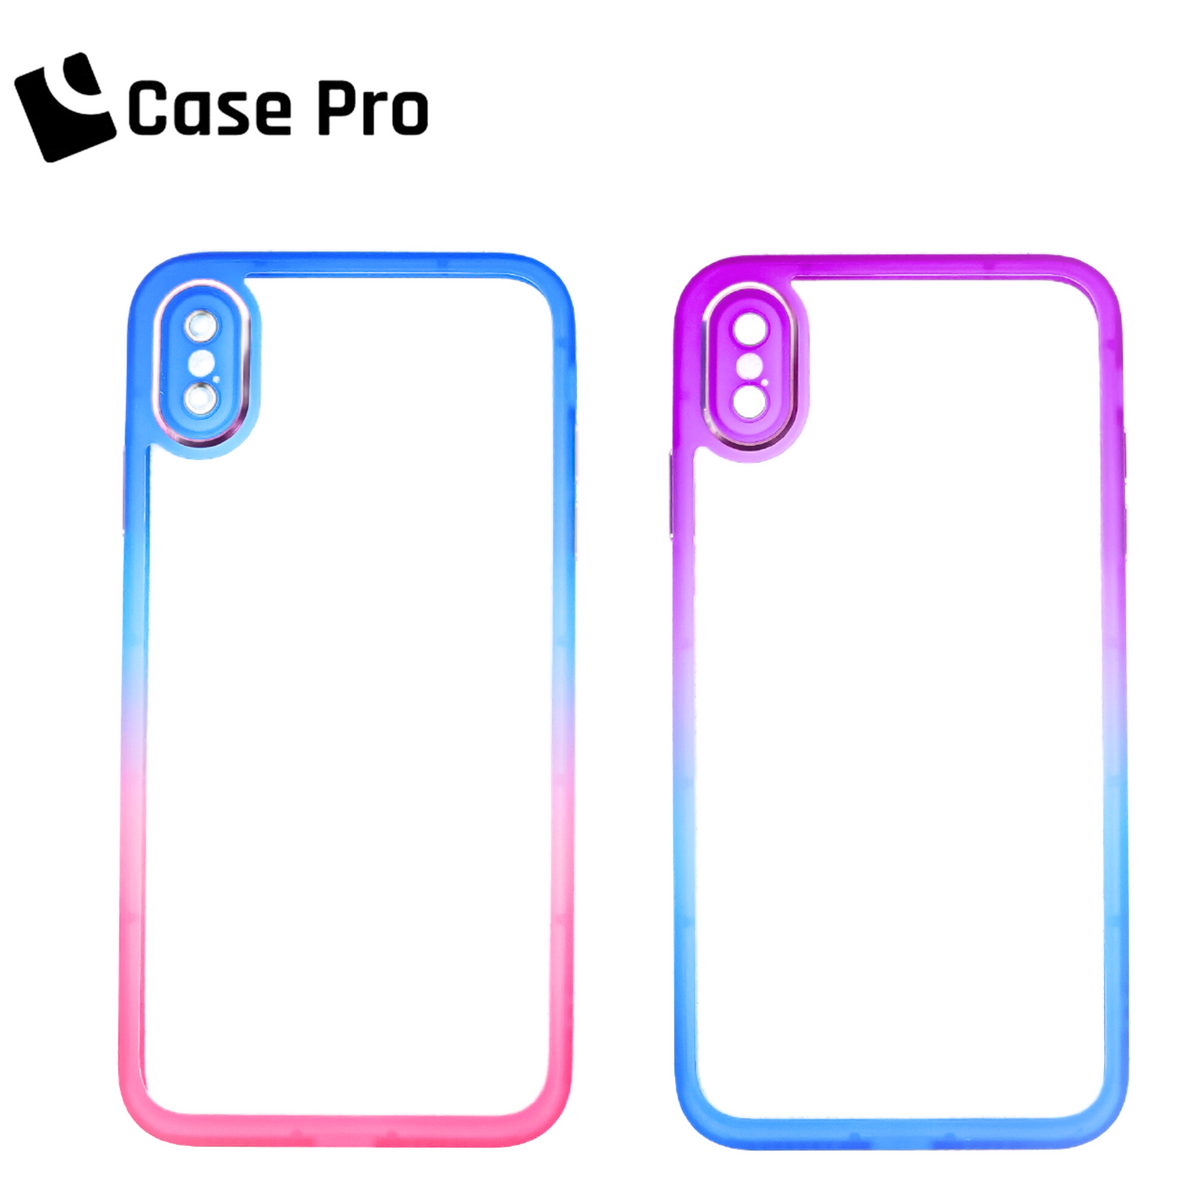 CasePro iPhone XS Max Case (Color Gradient)